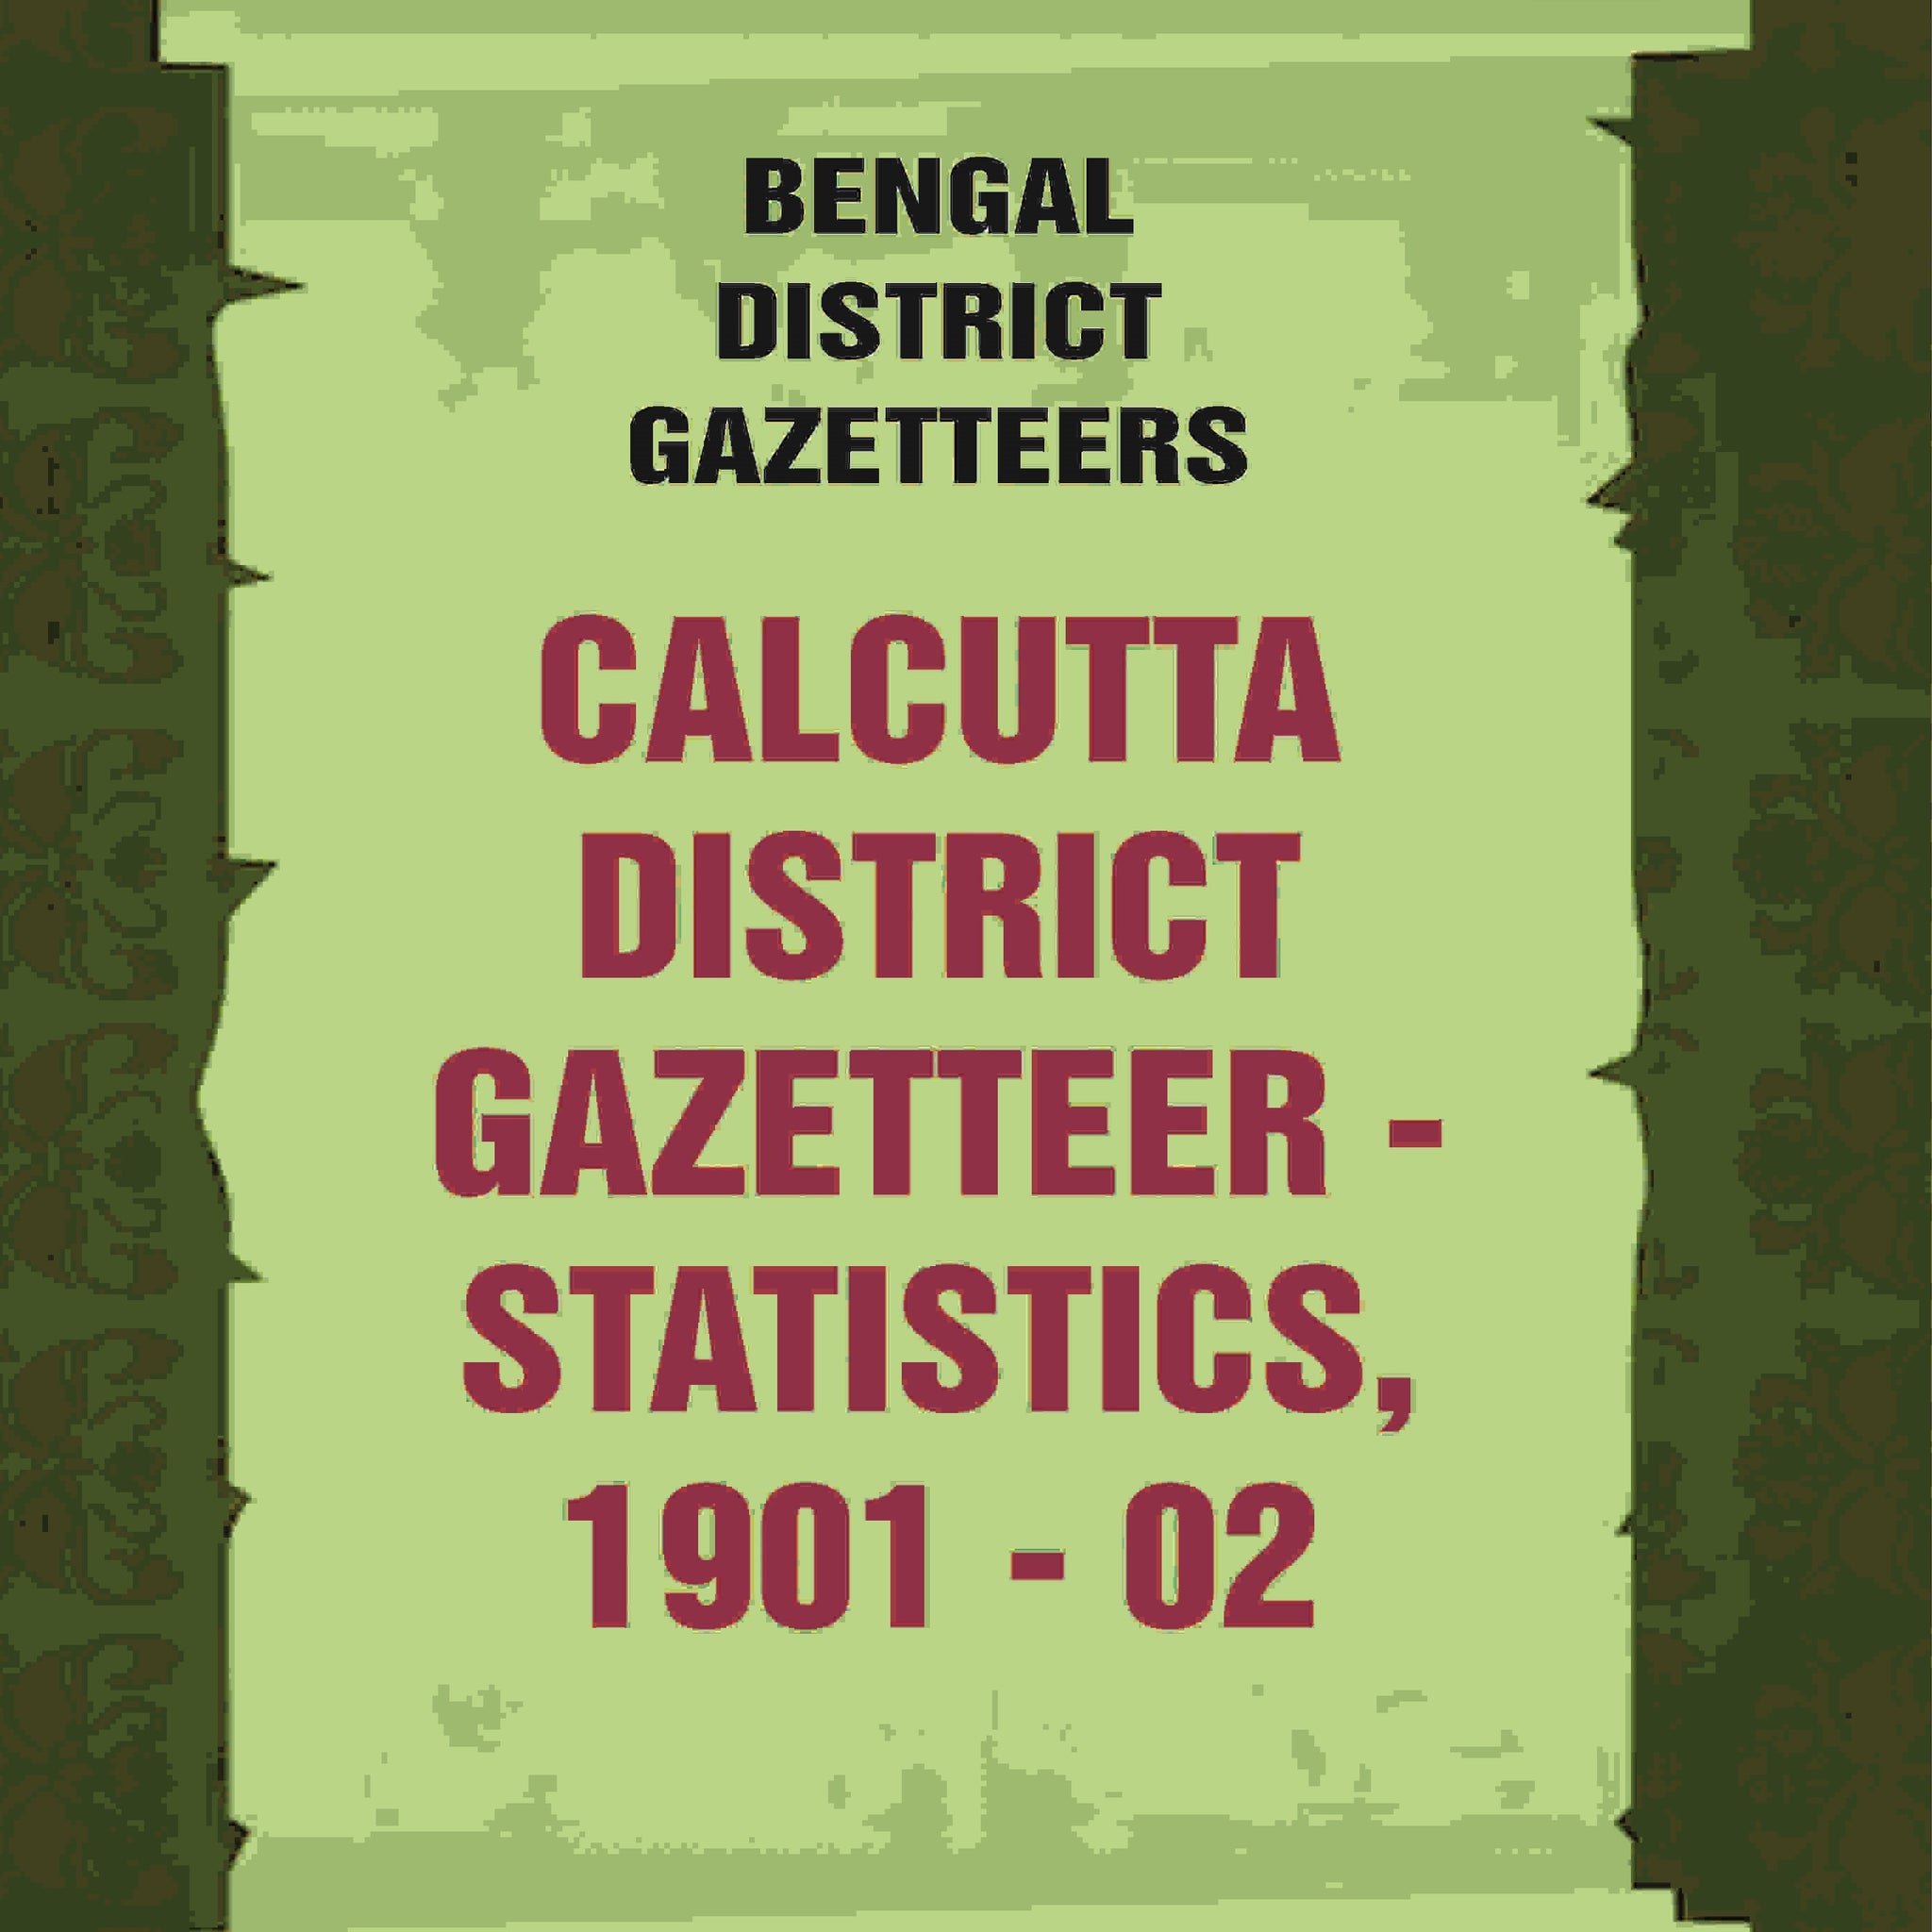 Bengal District Gazetteers: Calcutta District Gazetteer - Statistics, 1901 - 02